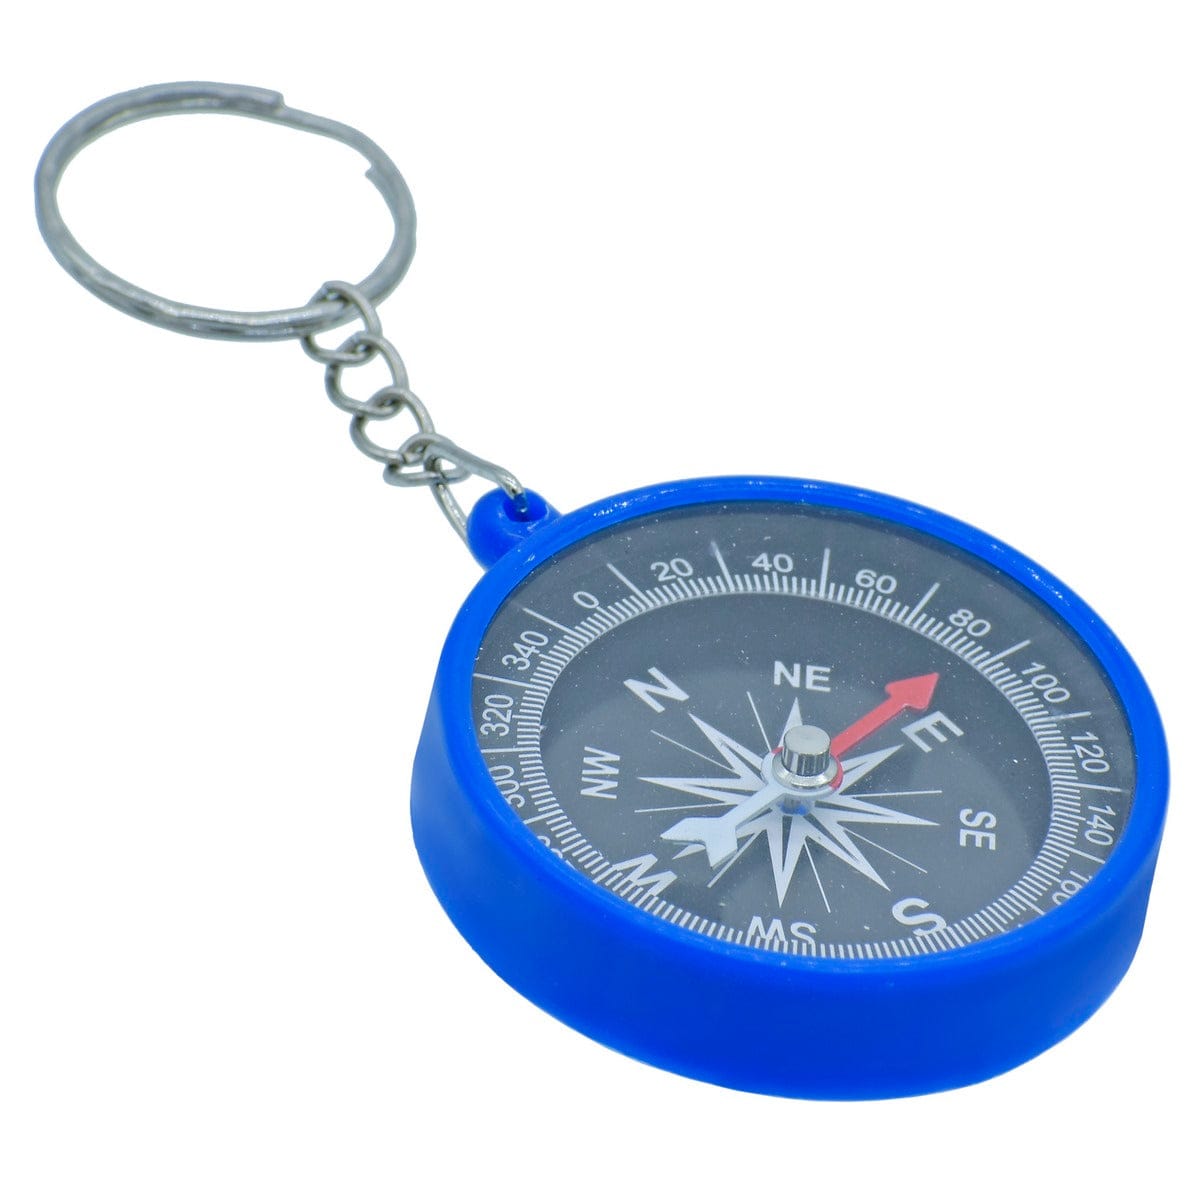 jags-mumbai Key Chain Magnetic Compass 2in1 Key Chain 45 MC2K-45